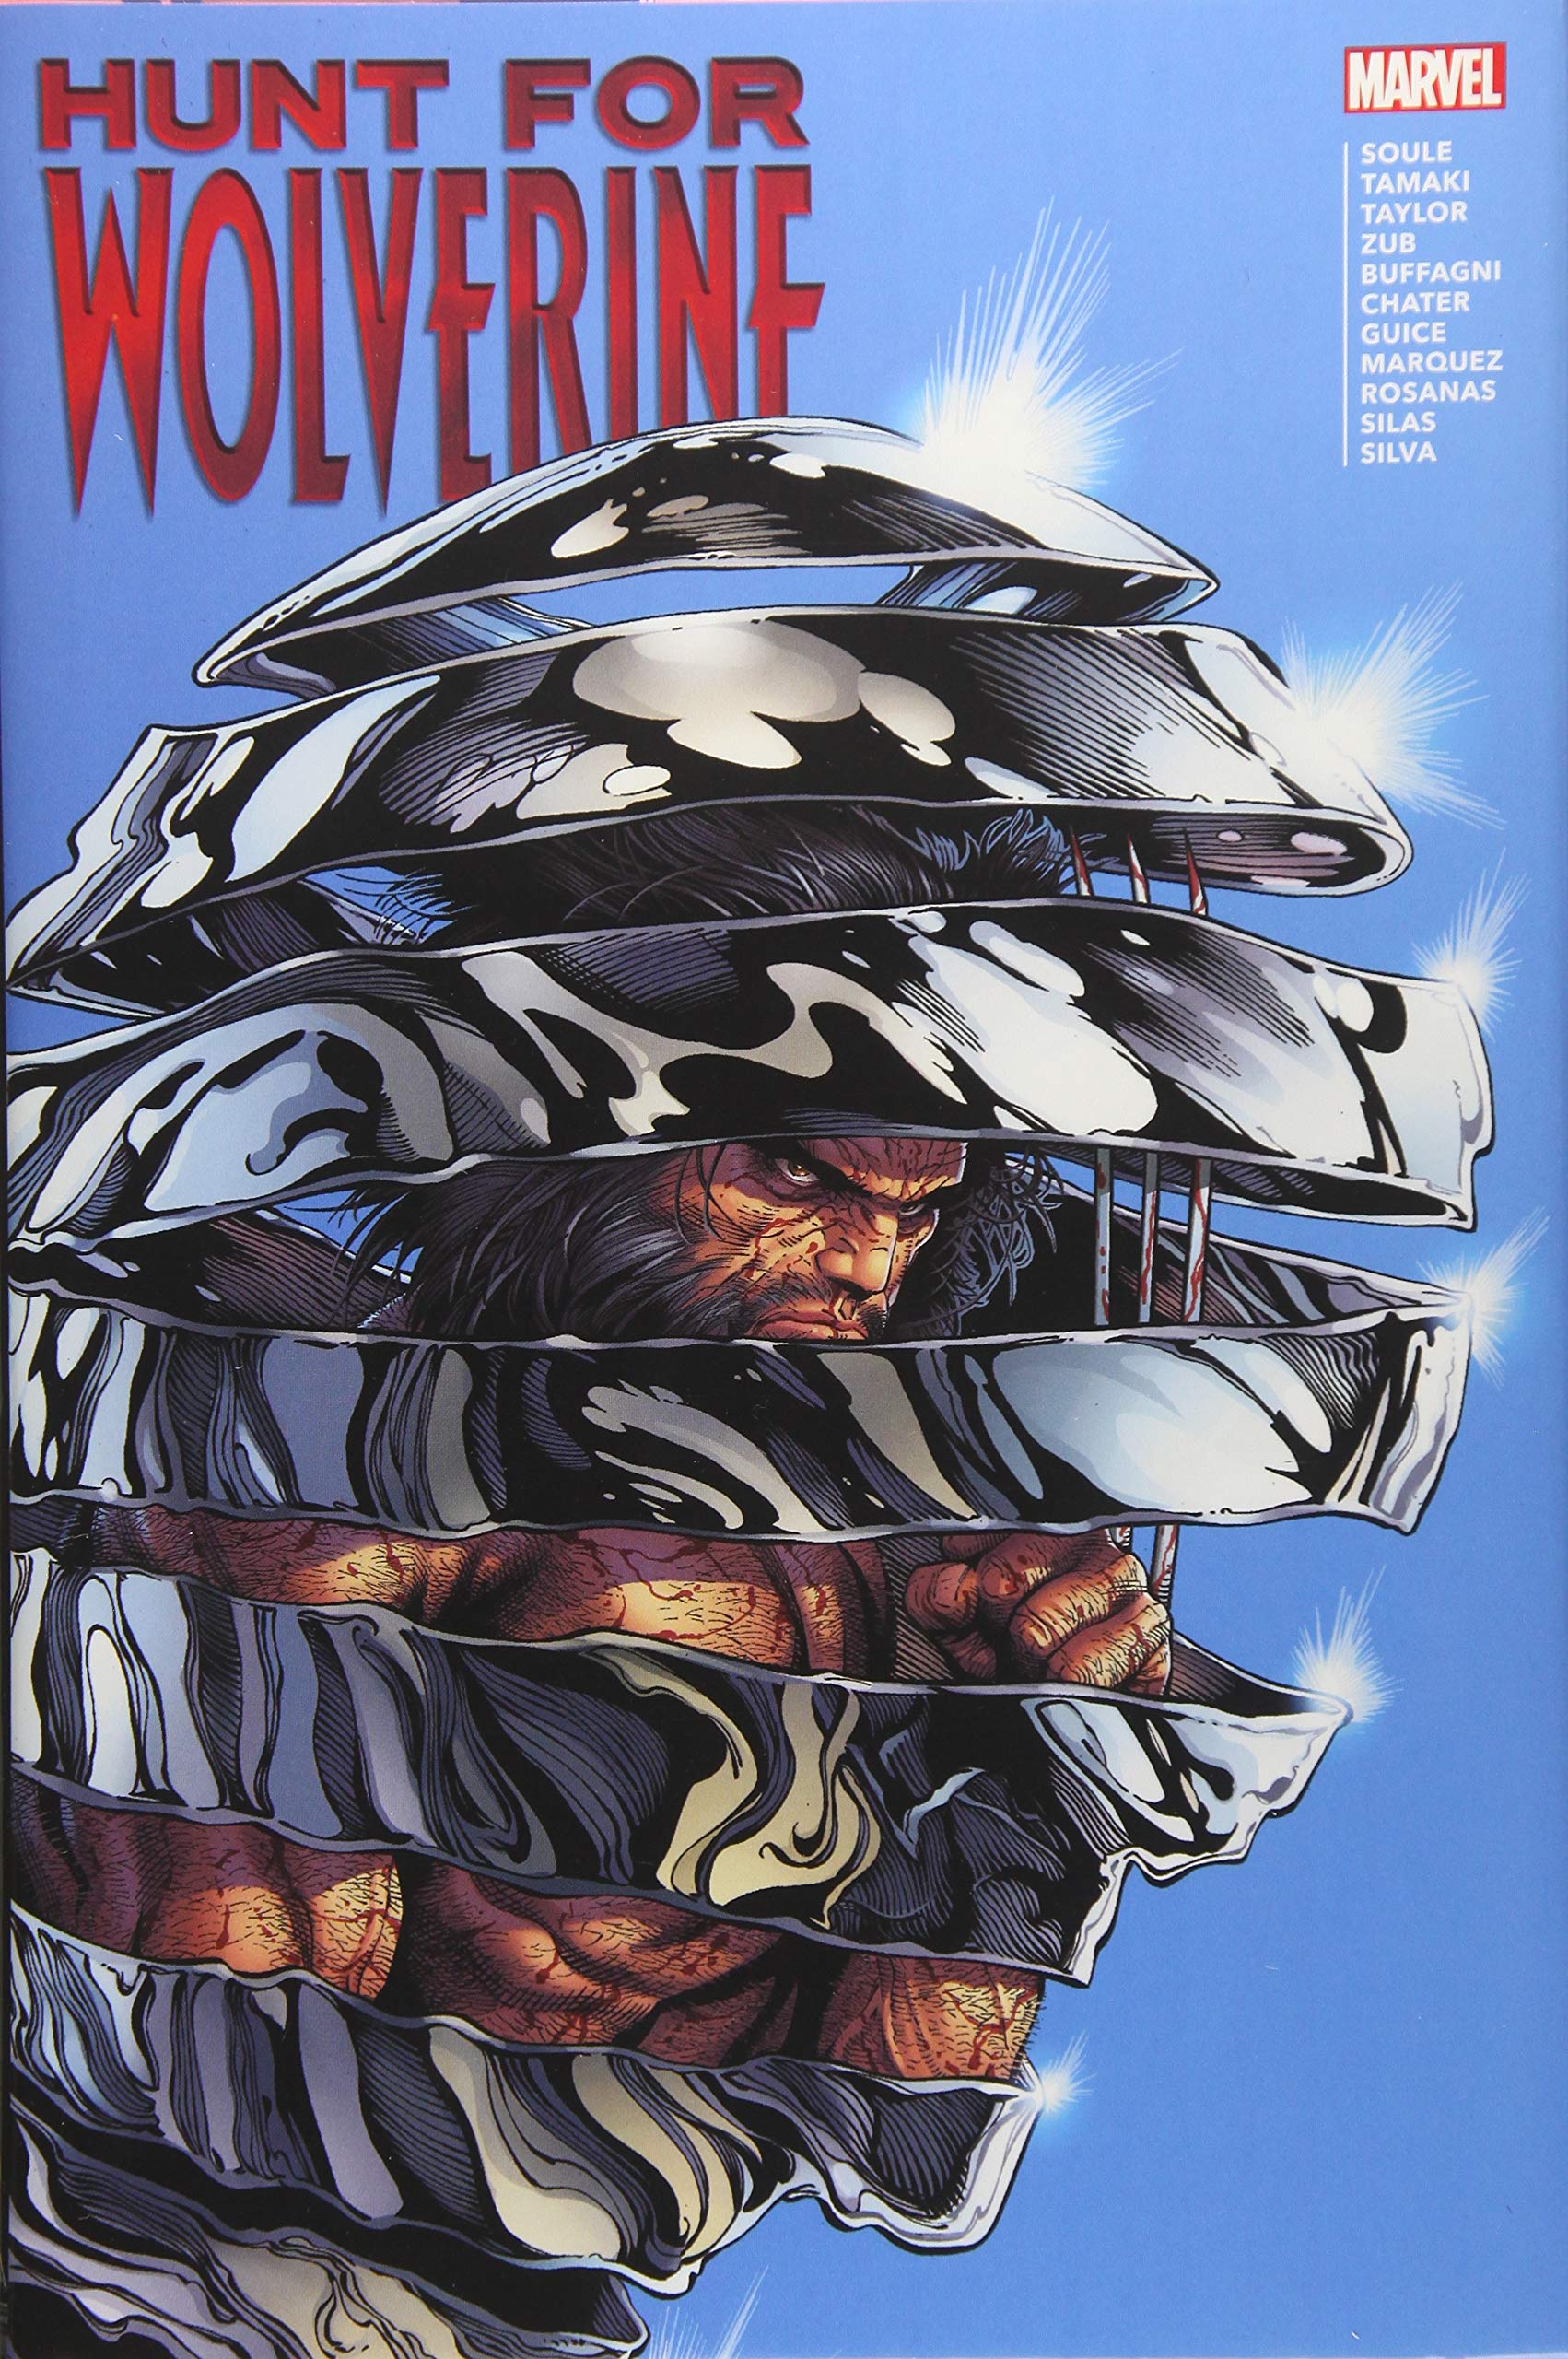 marvel comics, x-men comics, Marvel graphic novels, hunt for wolverine,  - Best Books